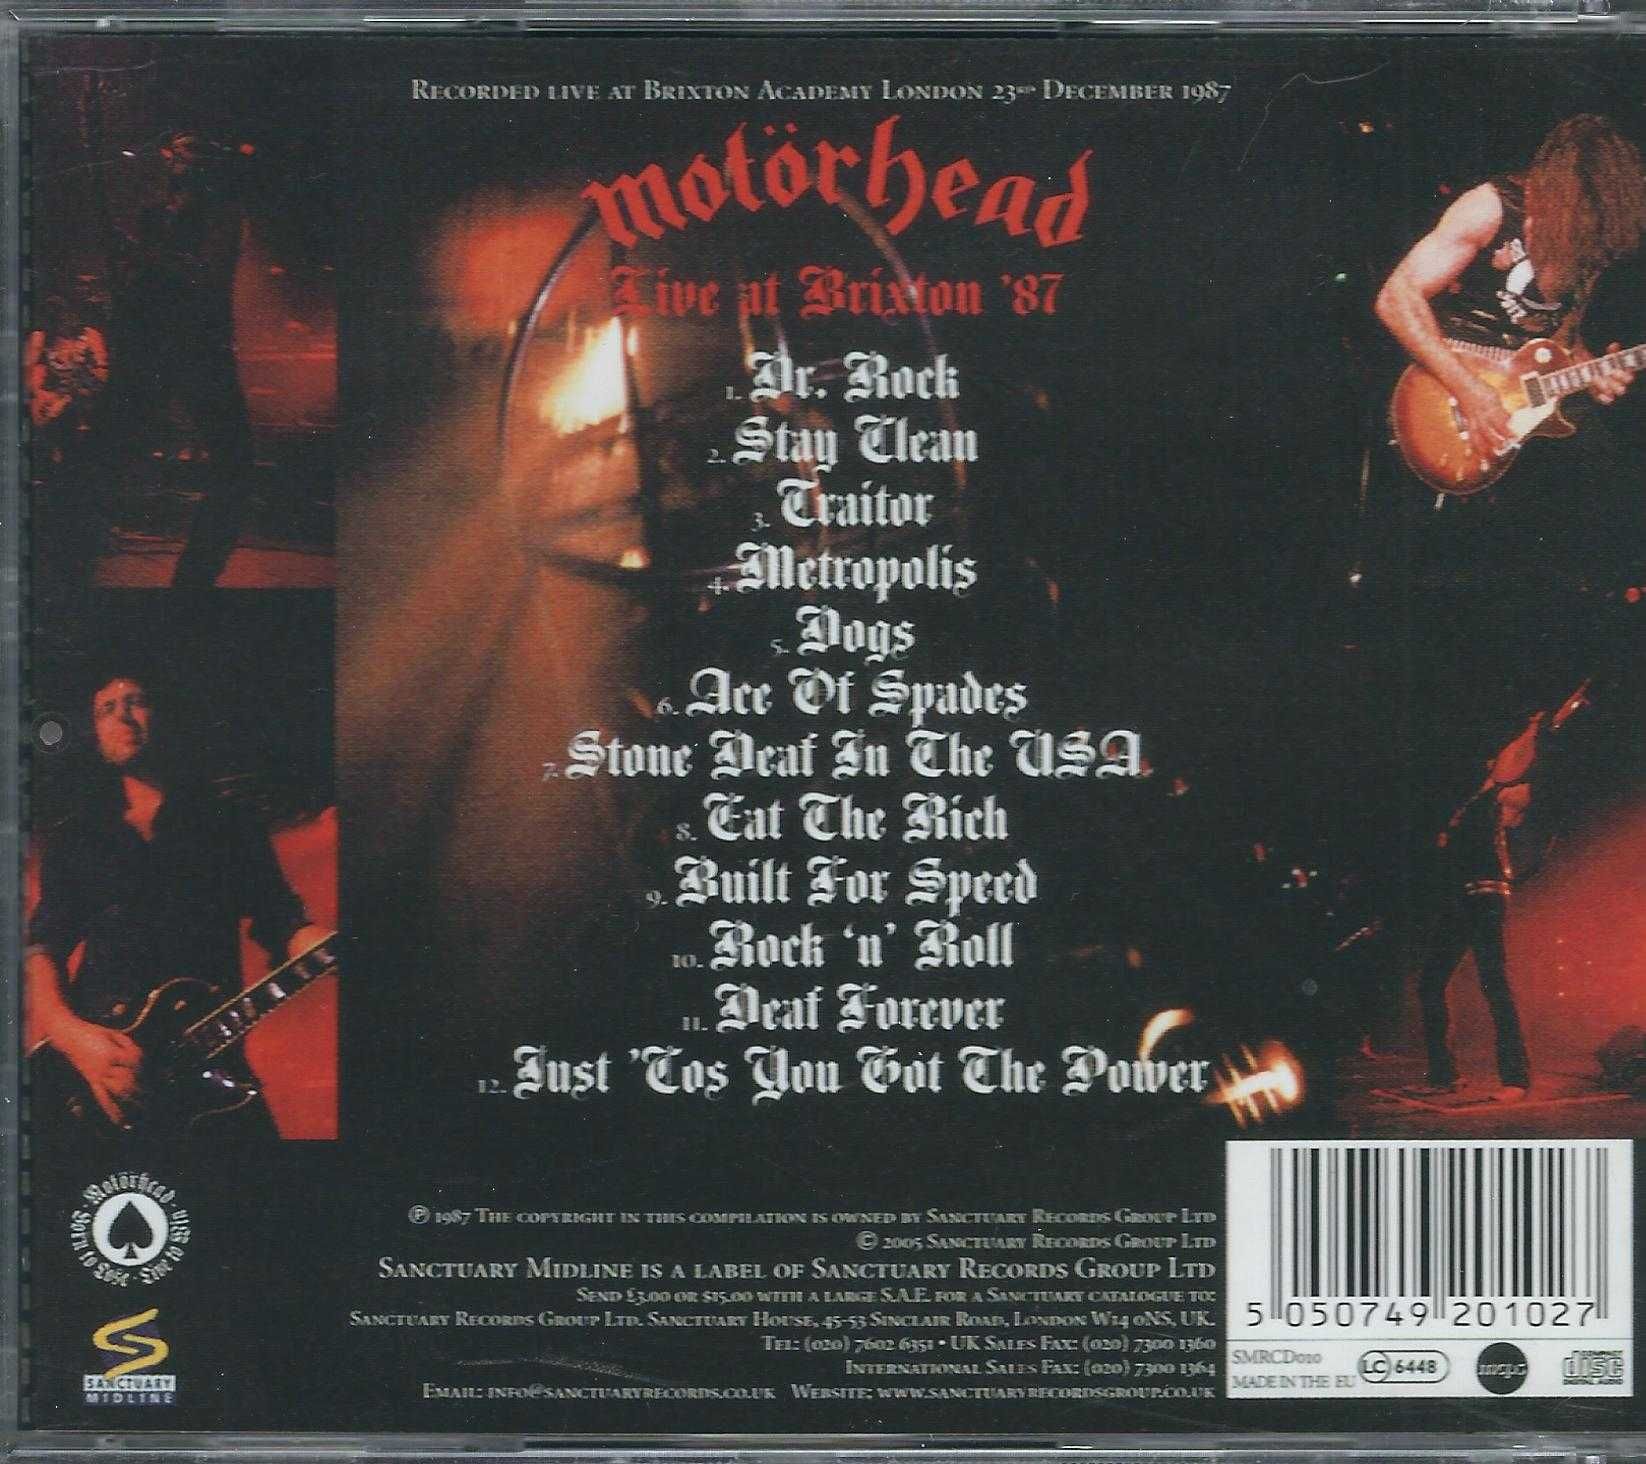 CD Motörhead - Live At Brixton '87 (2005) (Sanctuary Midline)